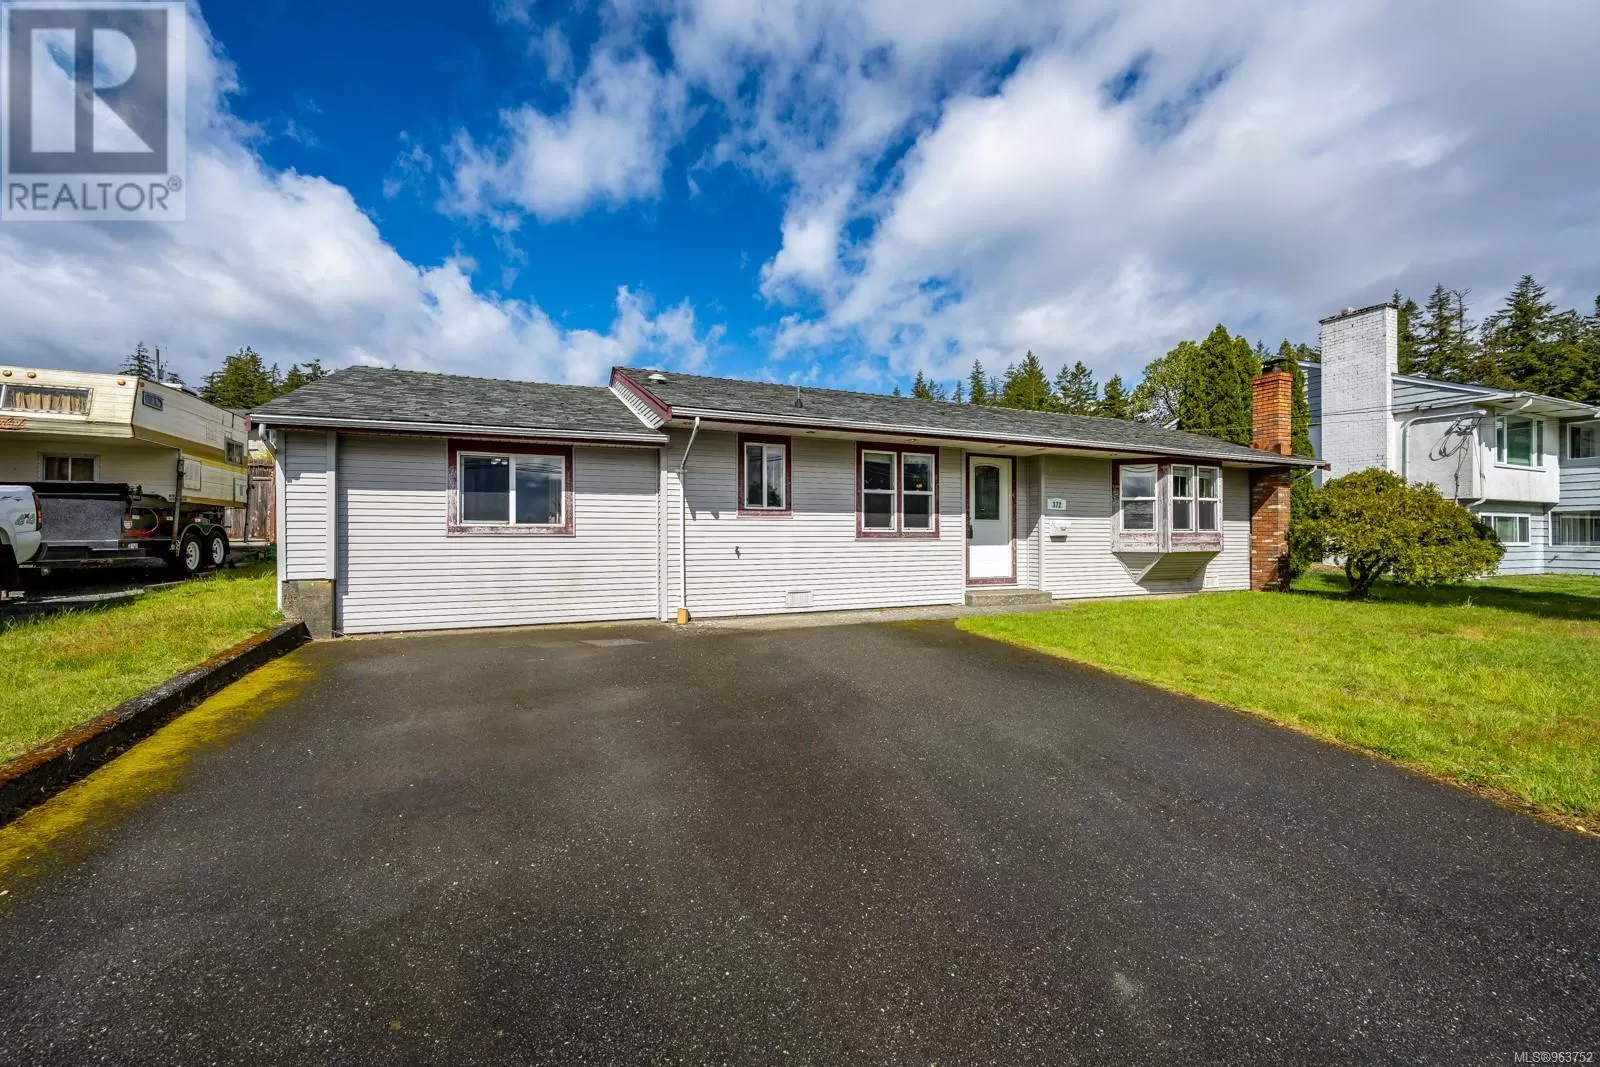 House for rent: 372 Alder St, Campbell River, British Columbia V9W 2N7